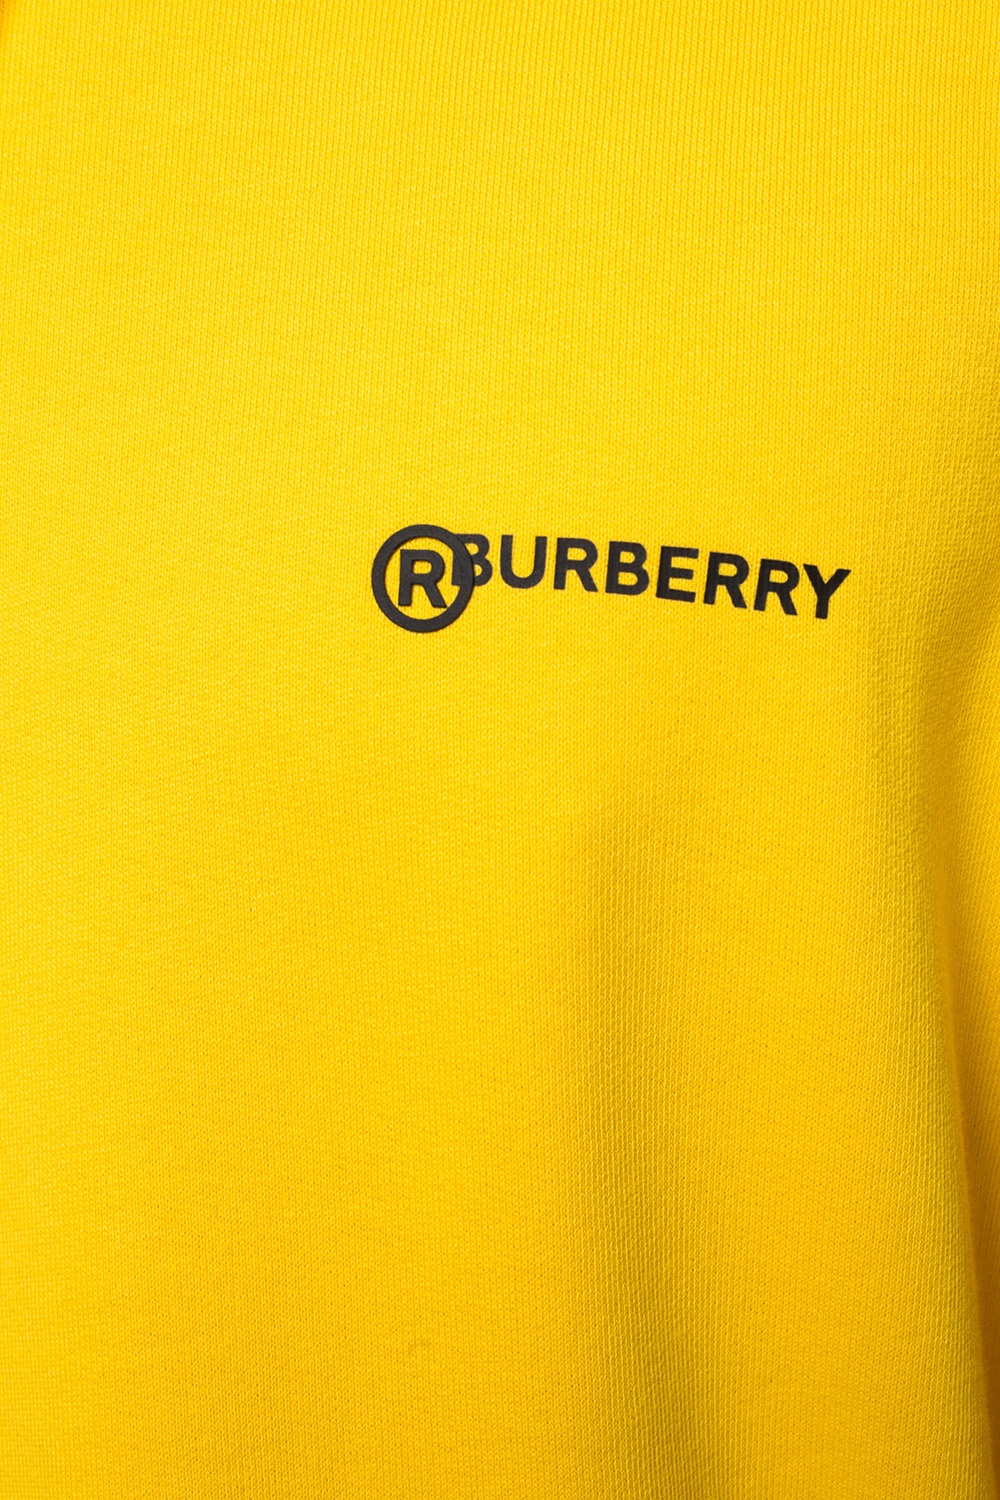 IetpShops | JONAH Burberry Sweatshirt with logo | Men's Clothing 